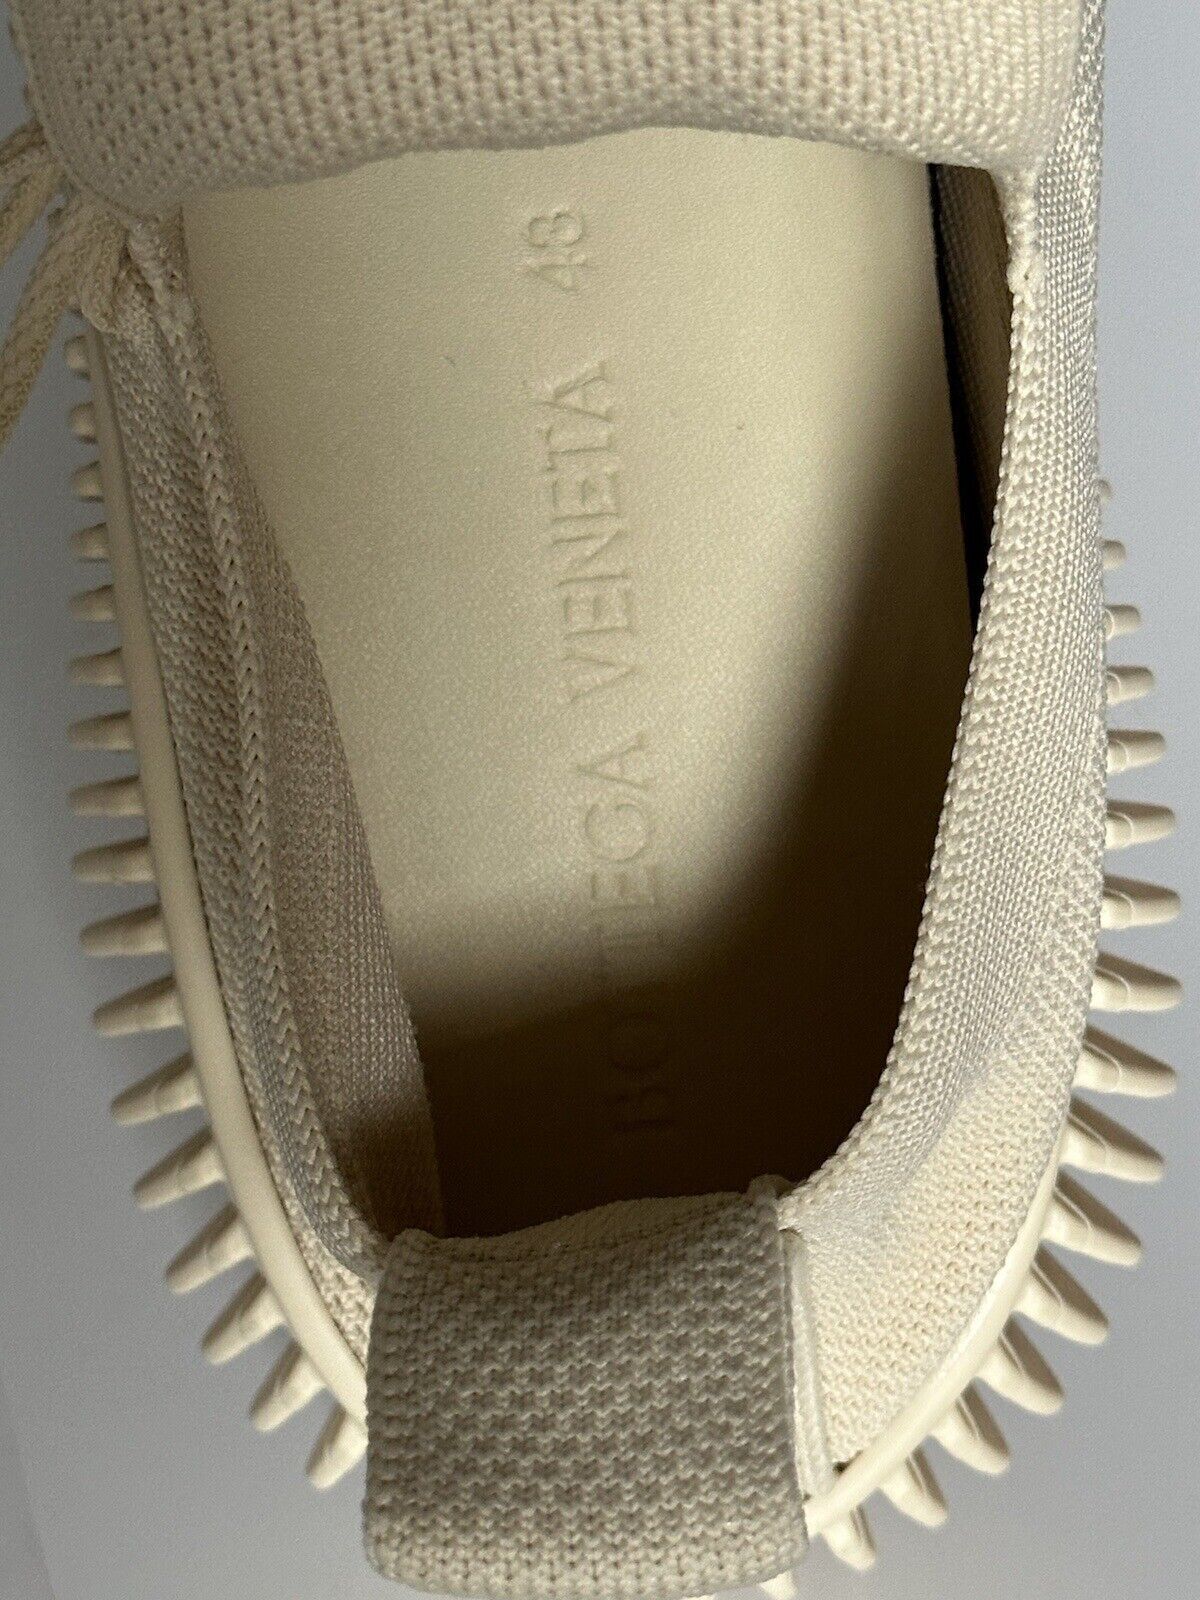 NIB $920 Bottega Veneta Men's Tech Knit Cane Sugar Sneakers 12 US (45 Eu) 690112